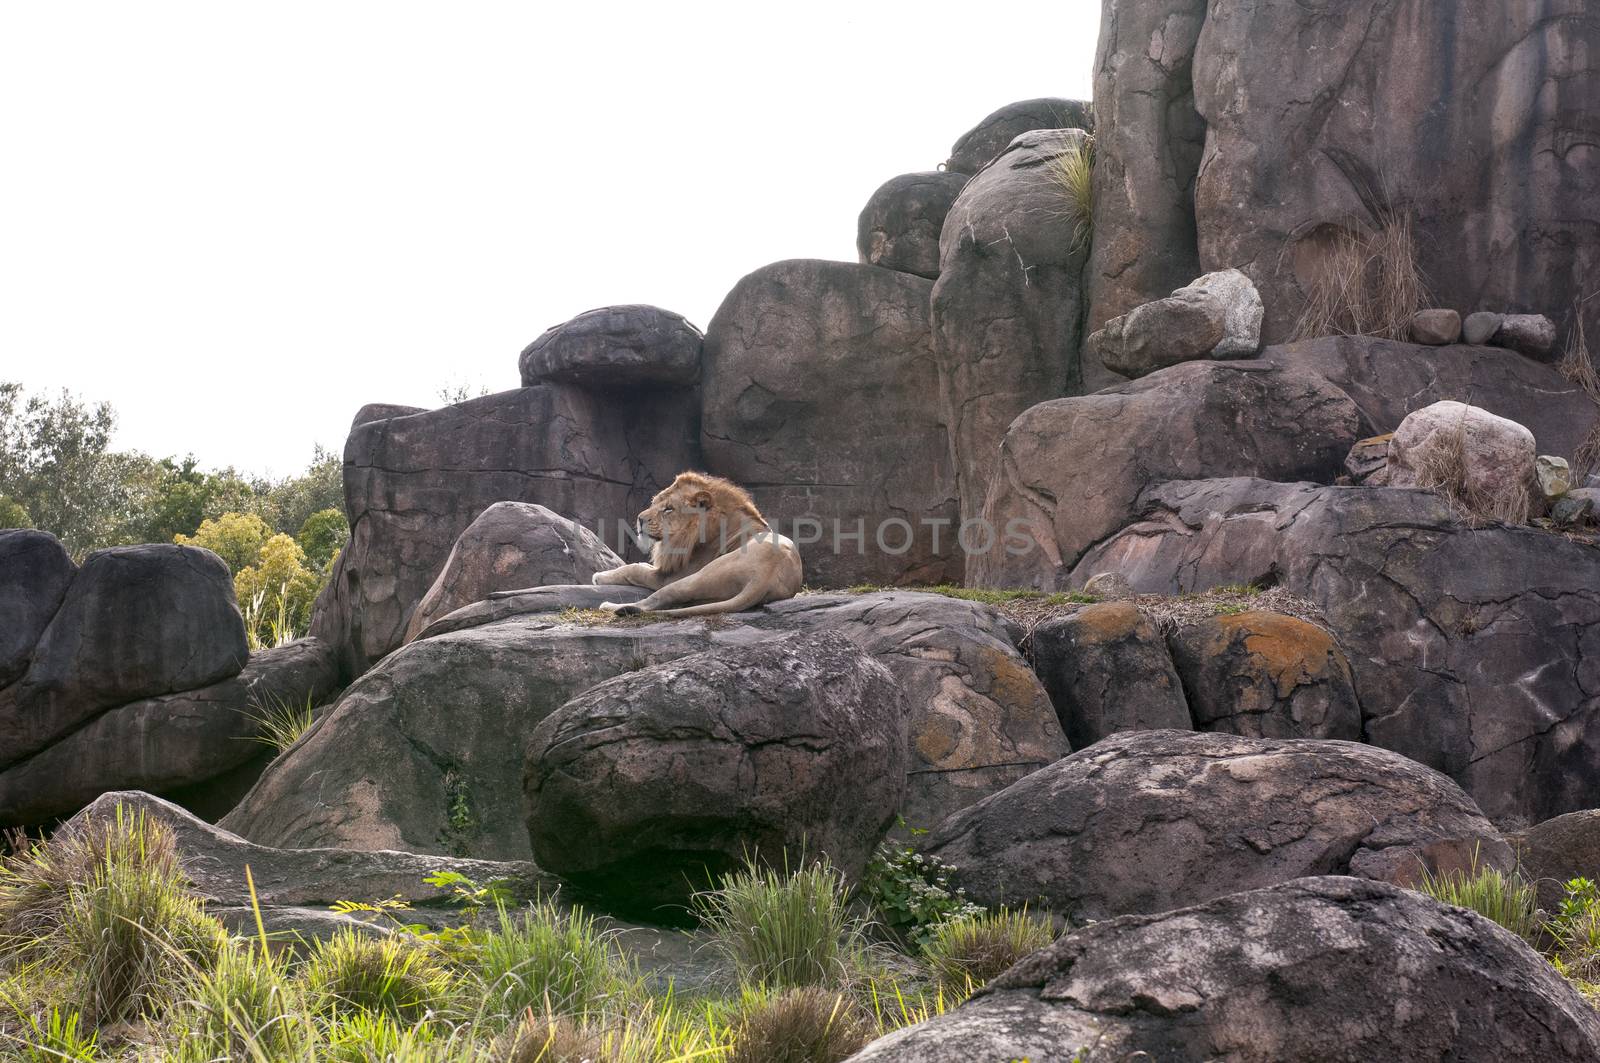 captive lion (Panthera leo) resting on rocks in zoo habitat by Njean